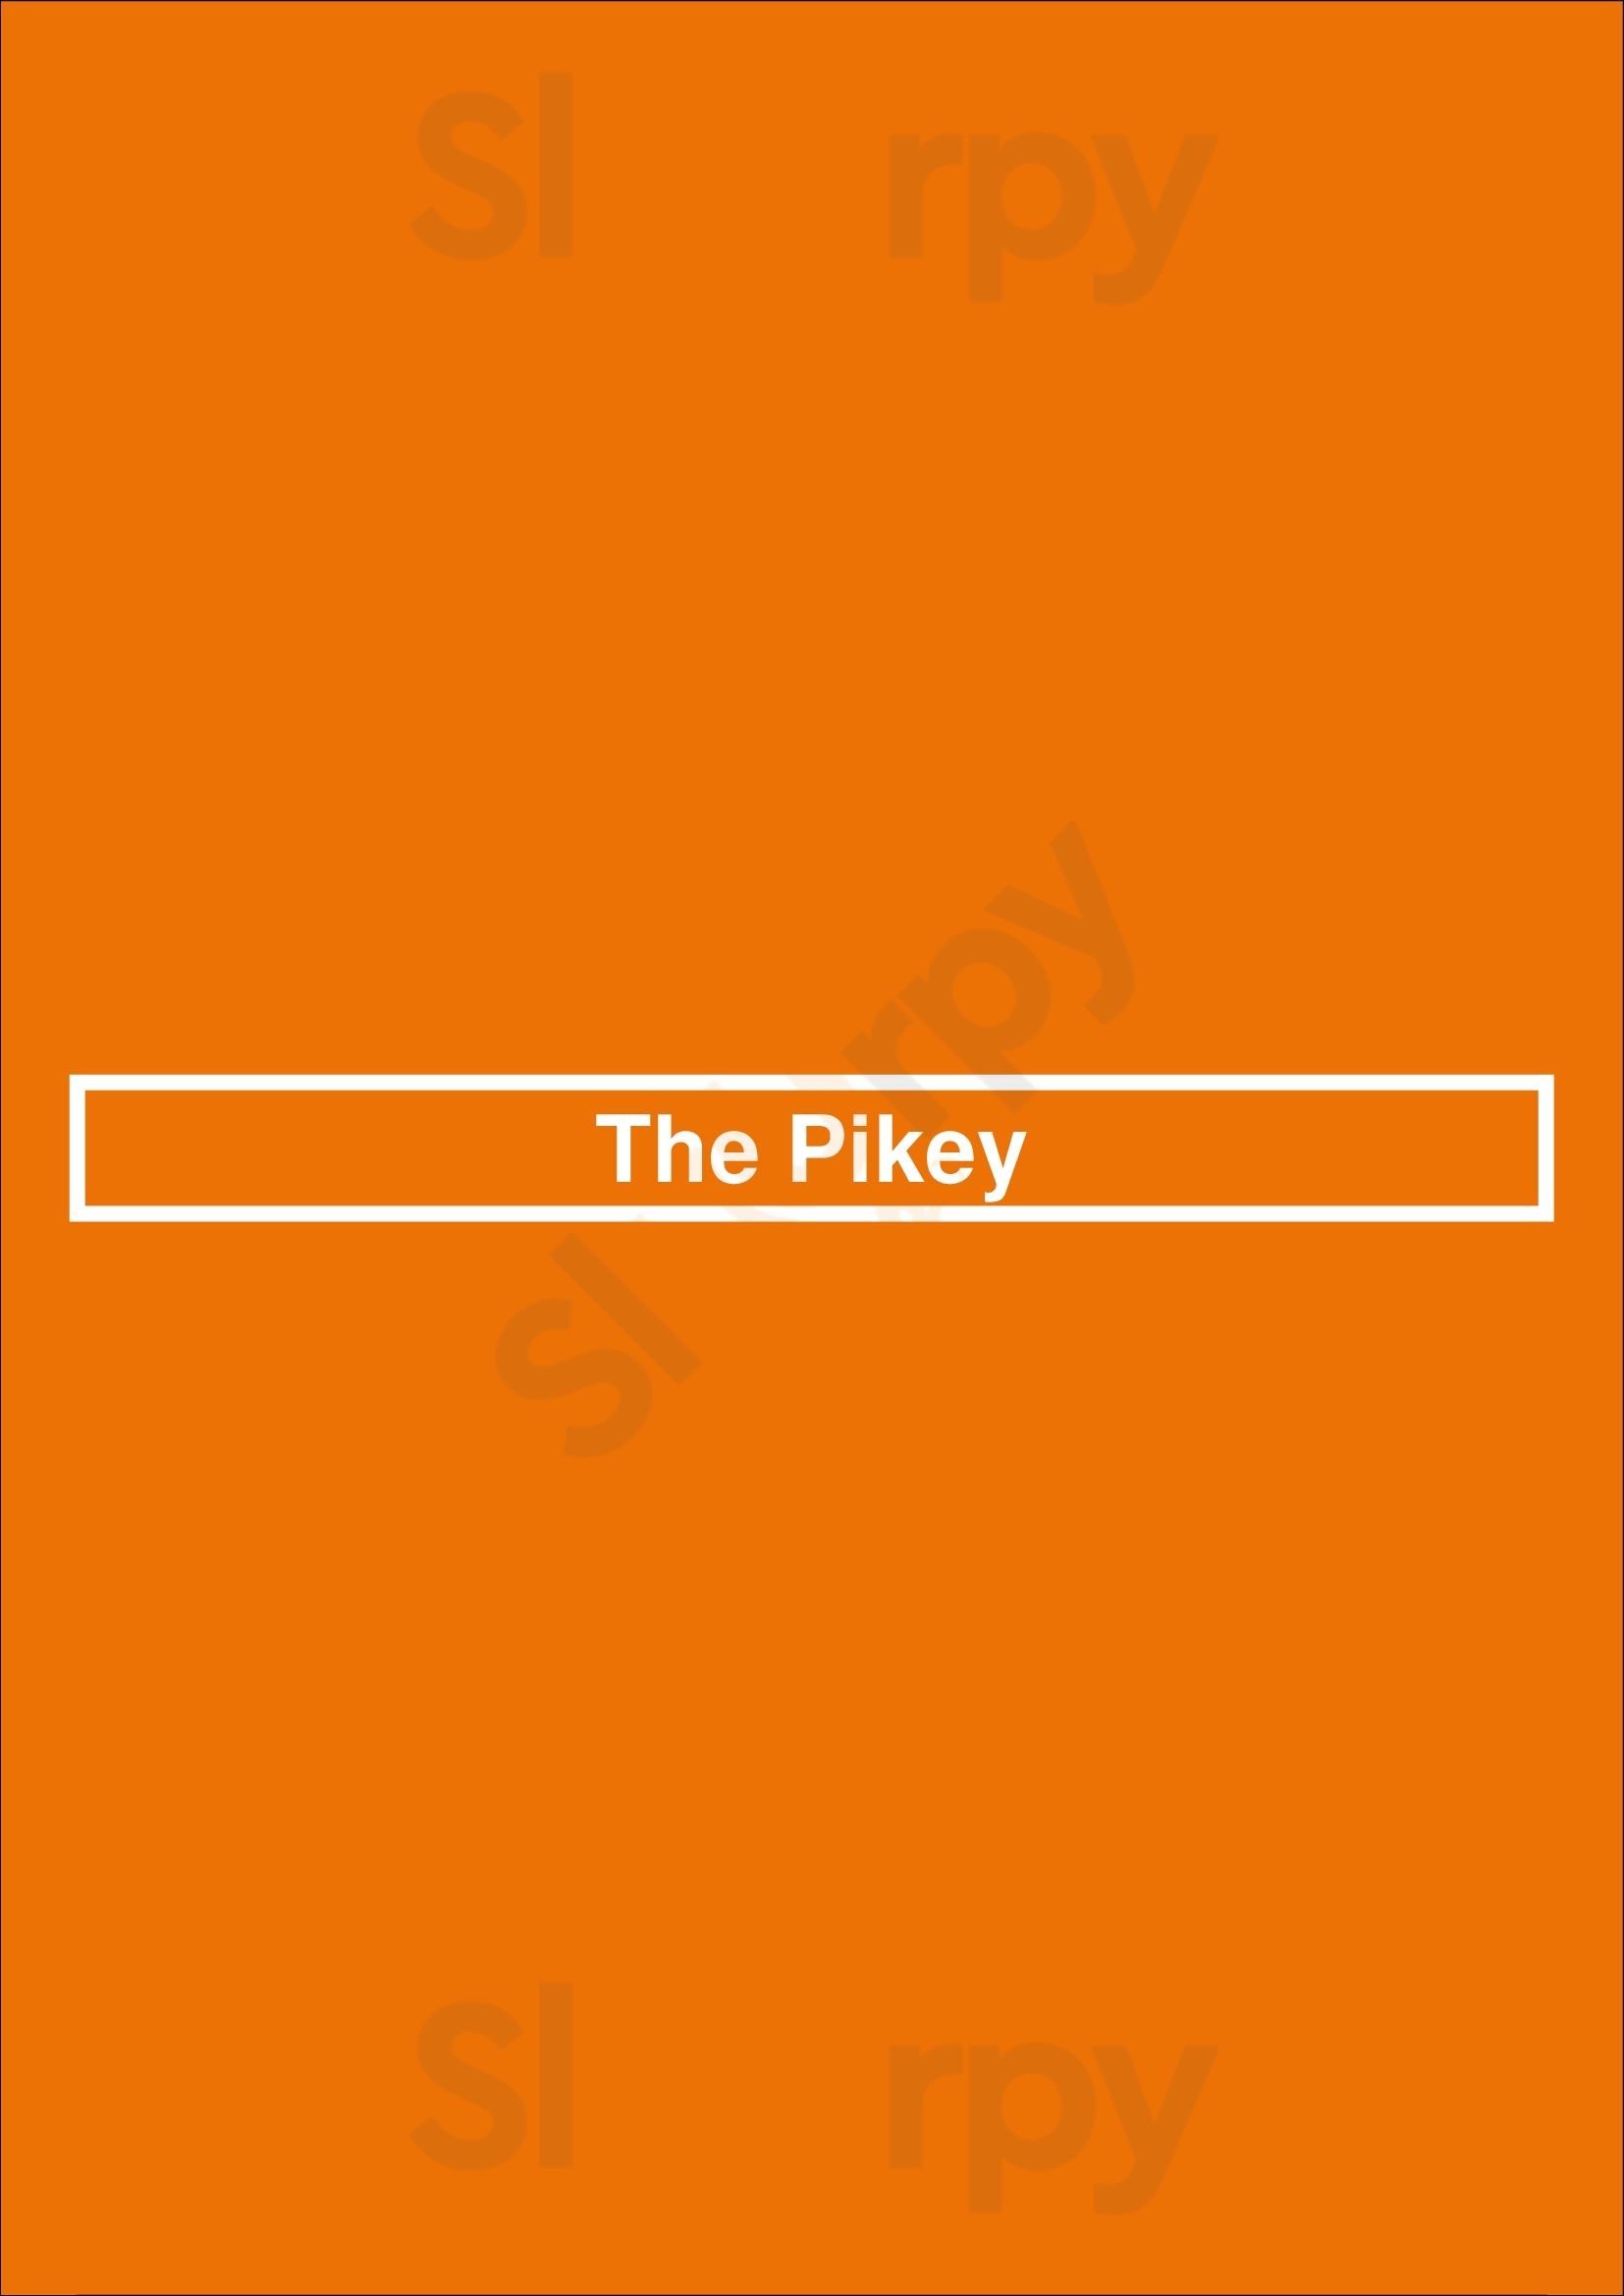 The Pikey Los Angeles Menu - 1